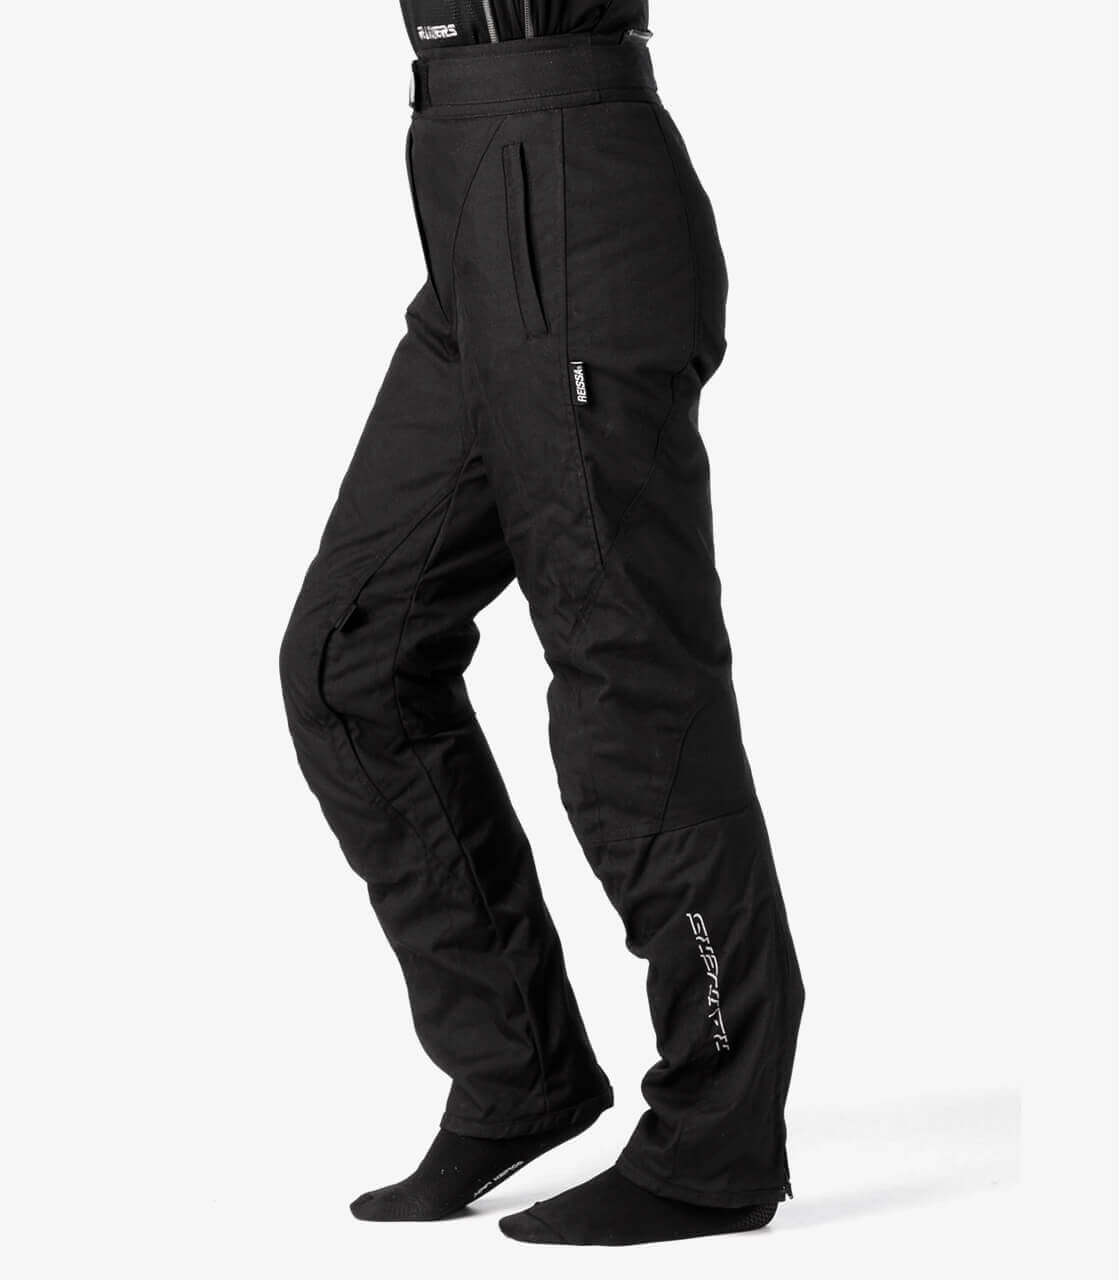 Pantalones Invierno mujer Rainers Sydney color negro